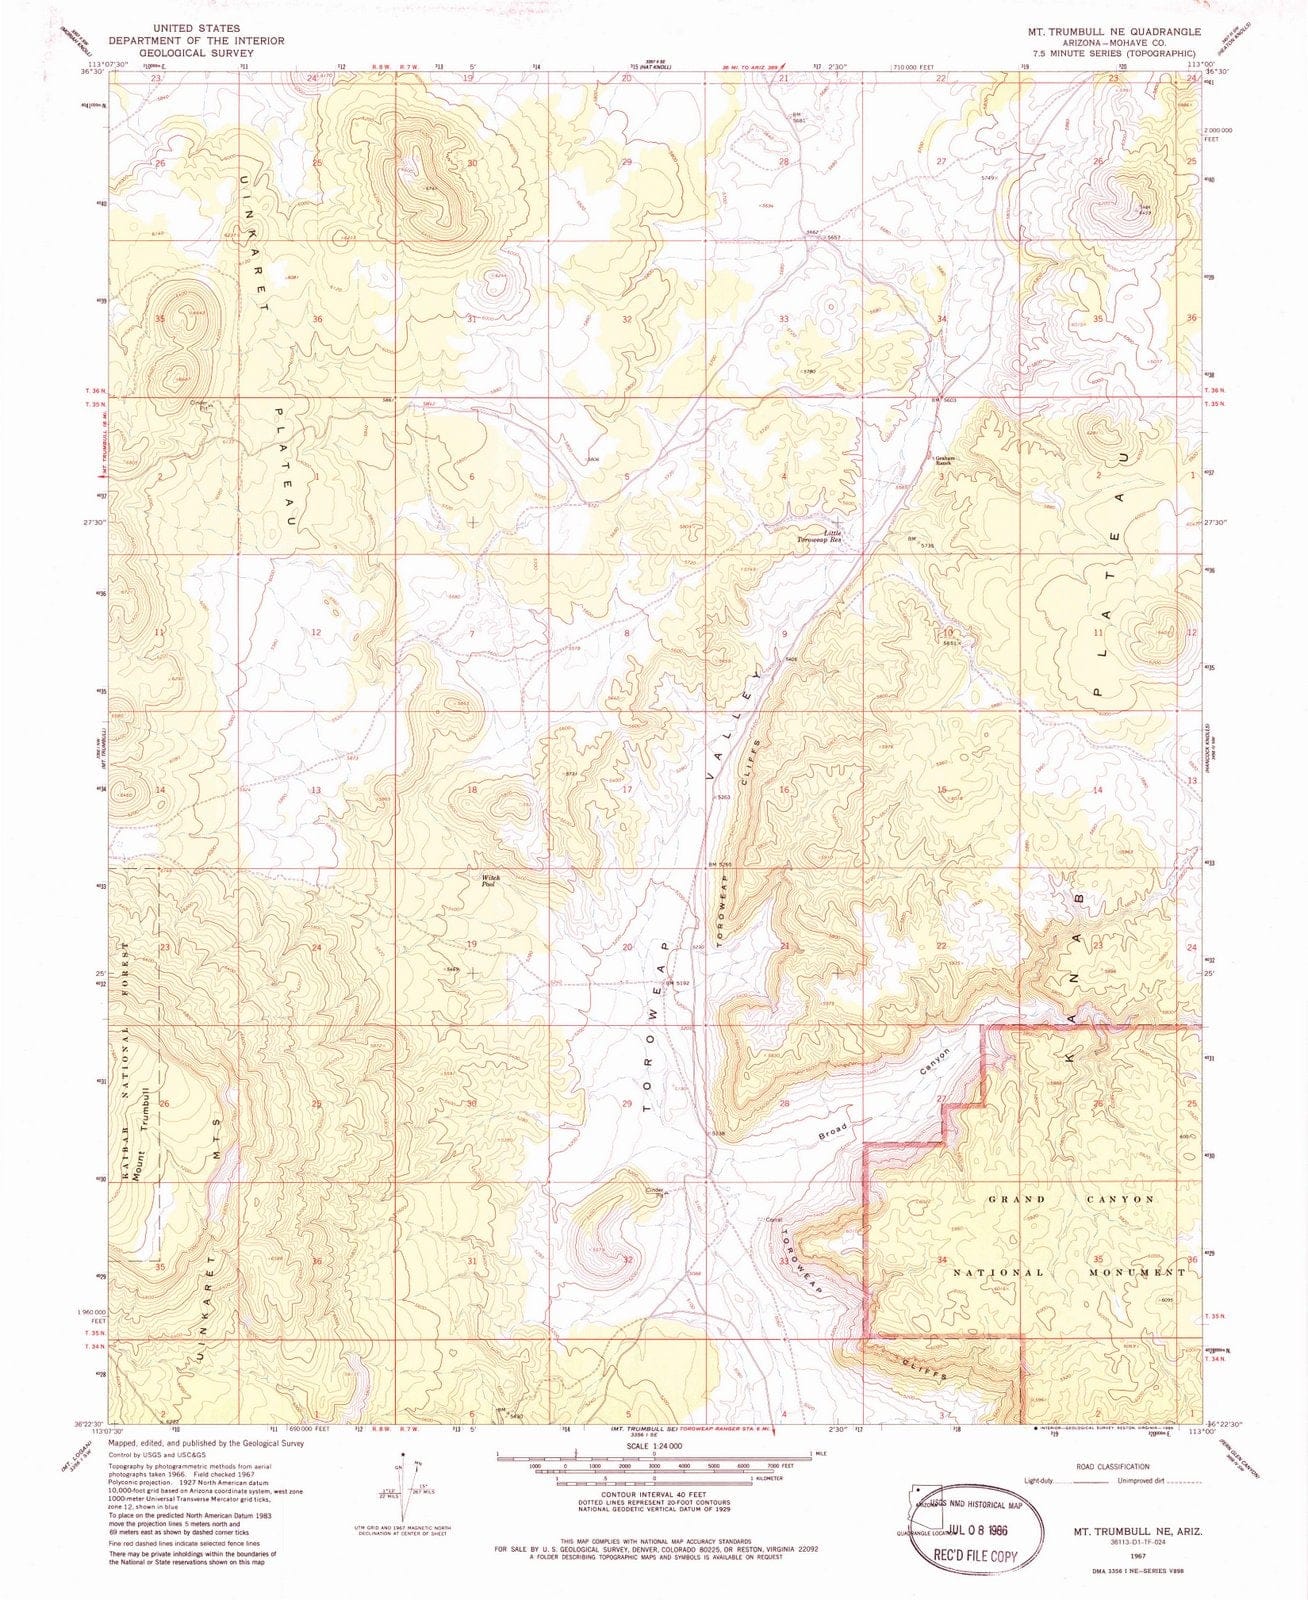 1967 Mount Trumbull, AZ - Arizona - USGS Topographic Map